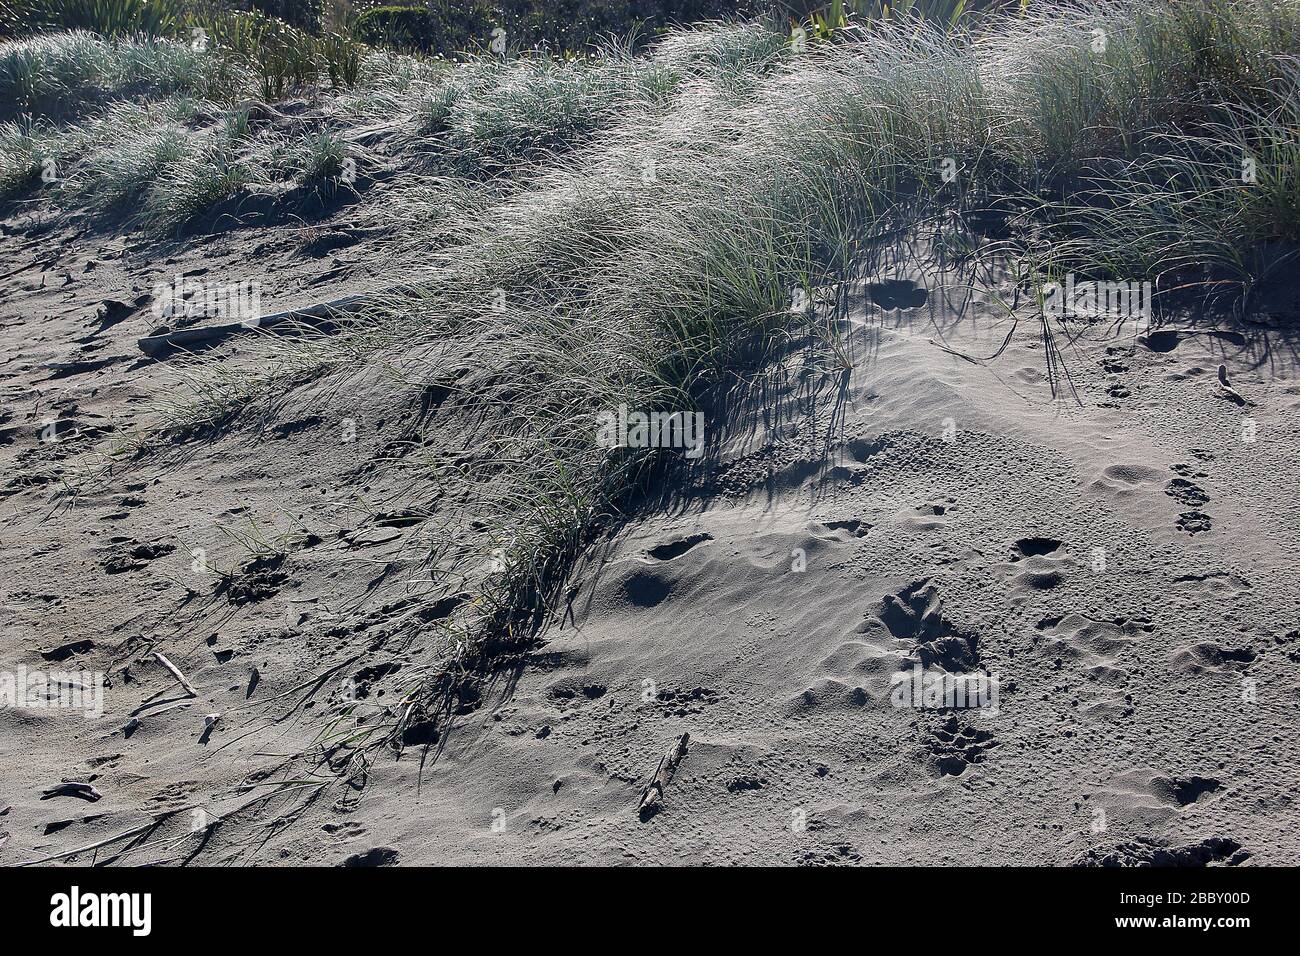 Sand dune restoration Stock Photo